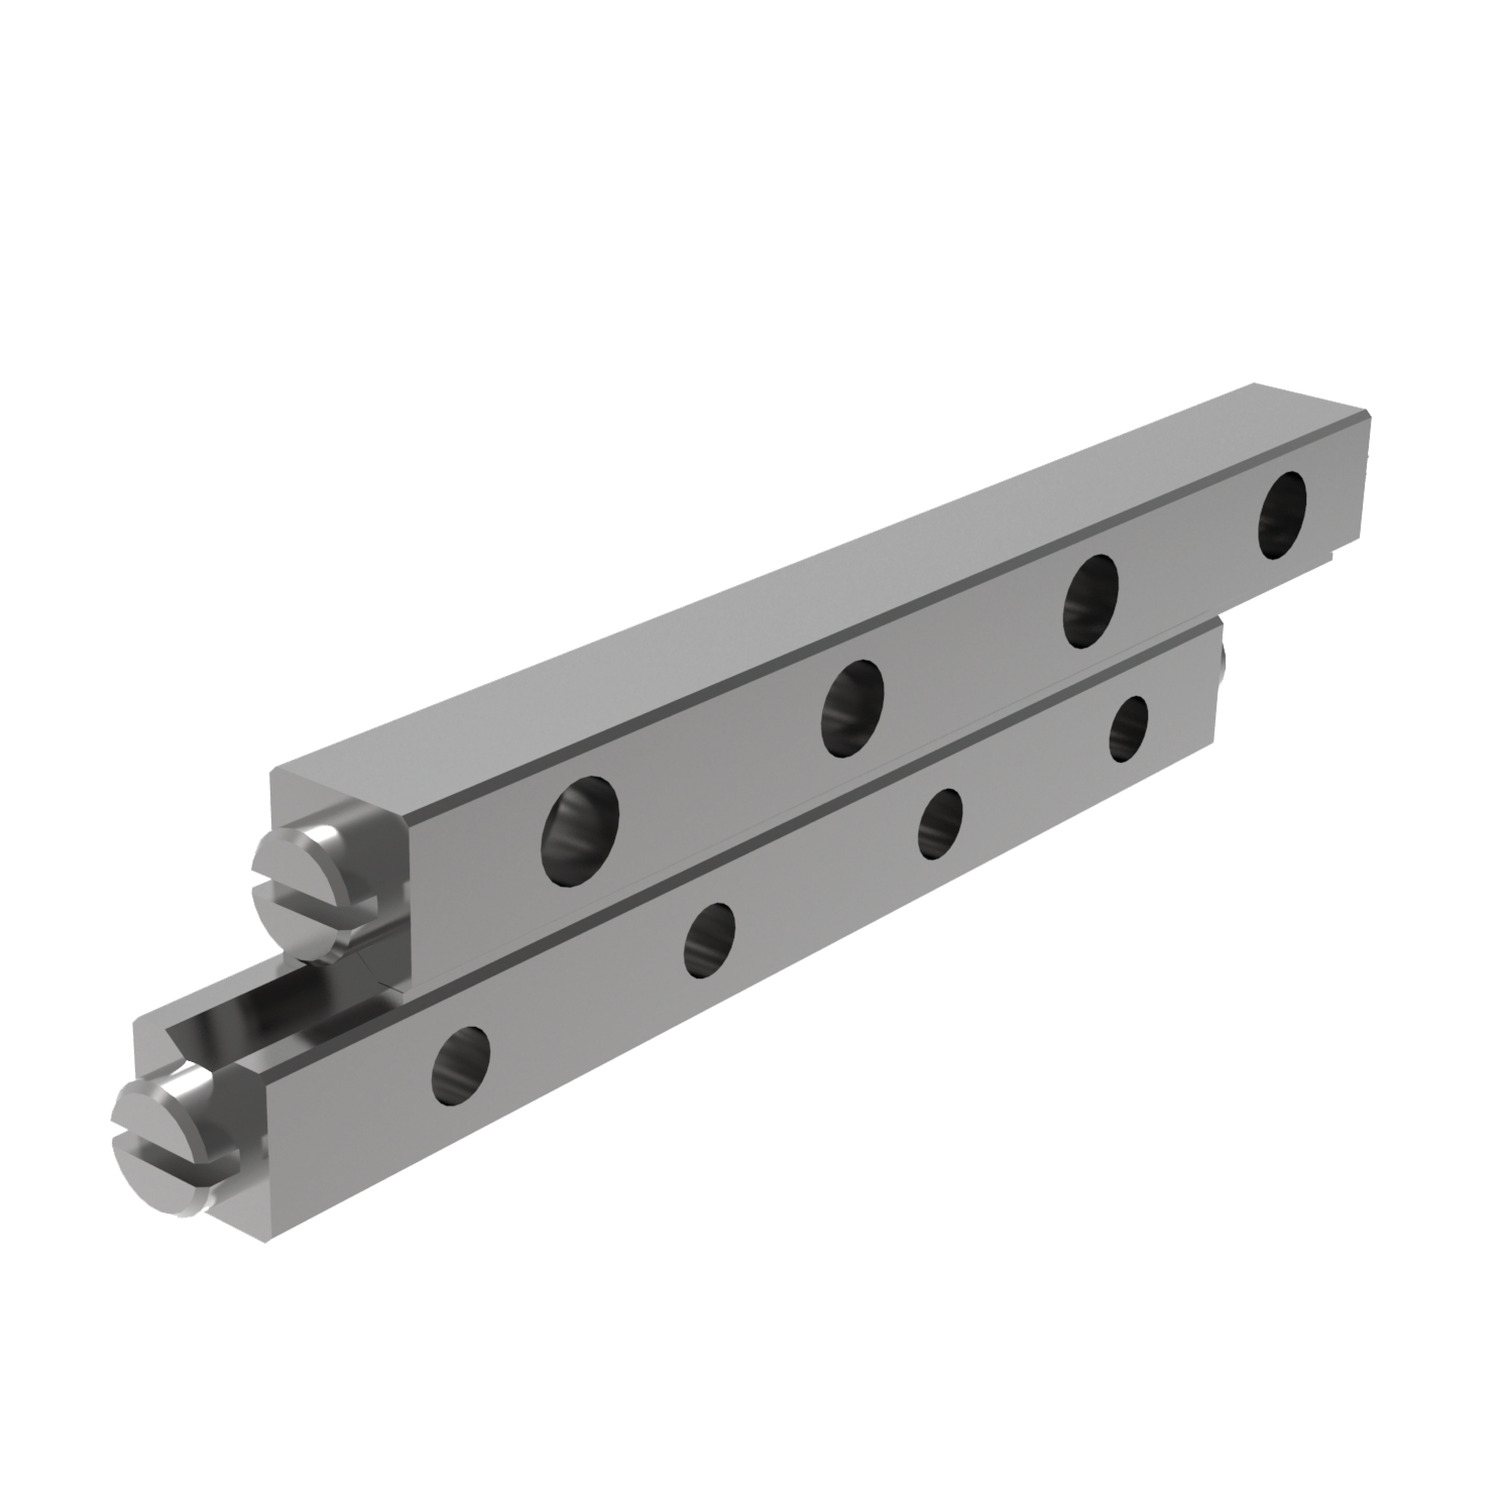 L1000.01-020 Crossed roller rail sets size 1 x 20mm Standard linear bearings sets consists of: 4 pcs. Rails, 2 pcs. roller cages, 8 pcs. end screws EC:20161897 WG:05063055211192